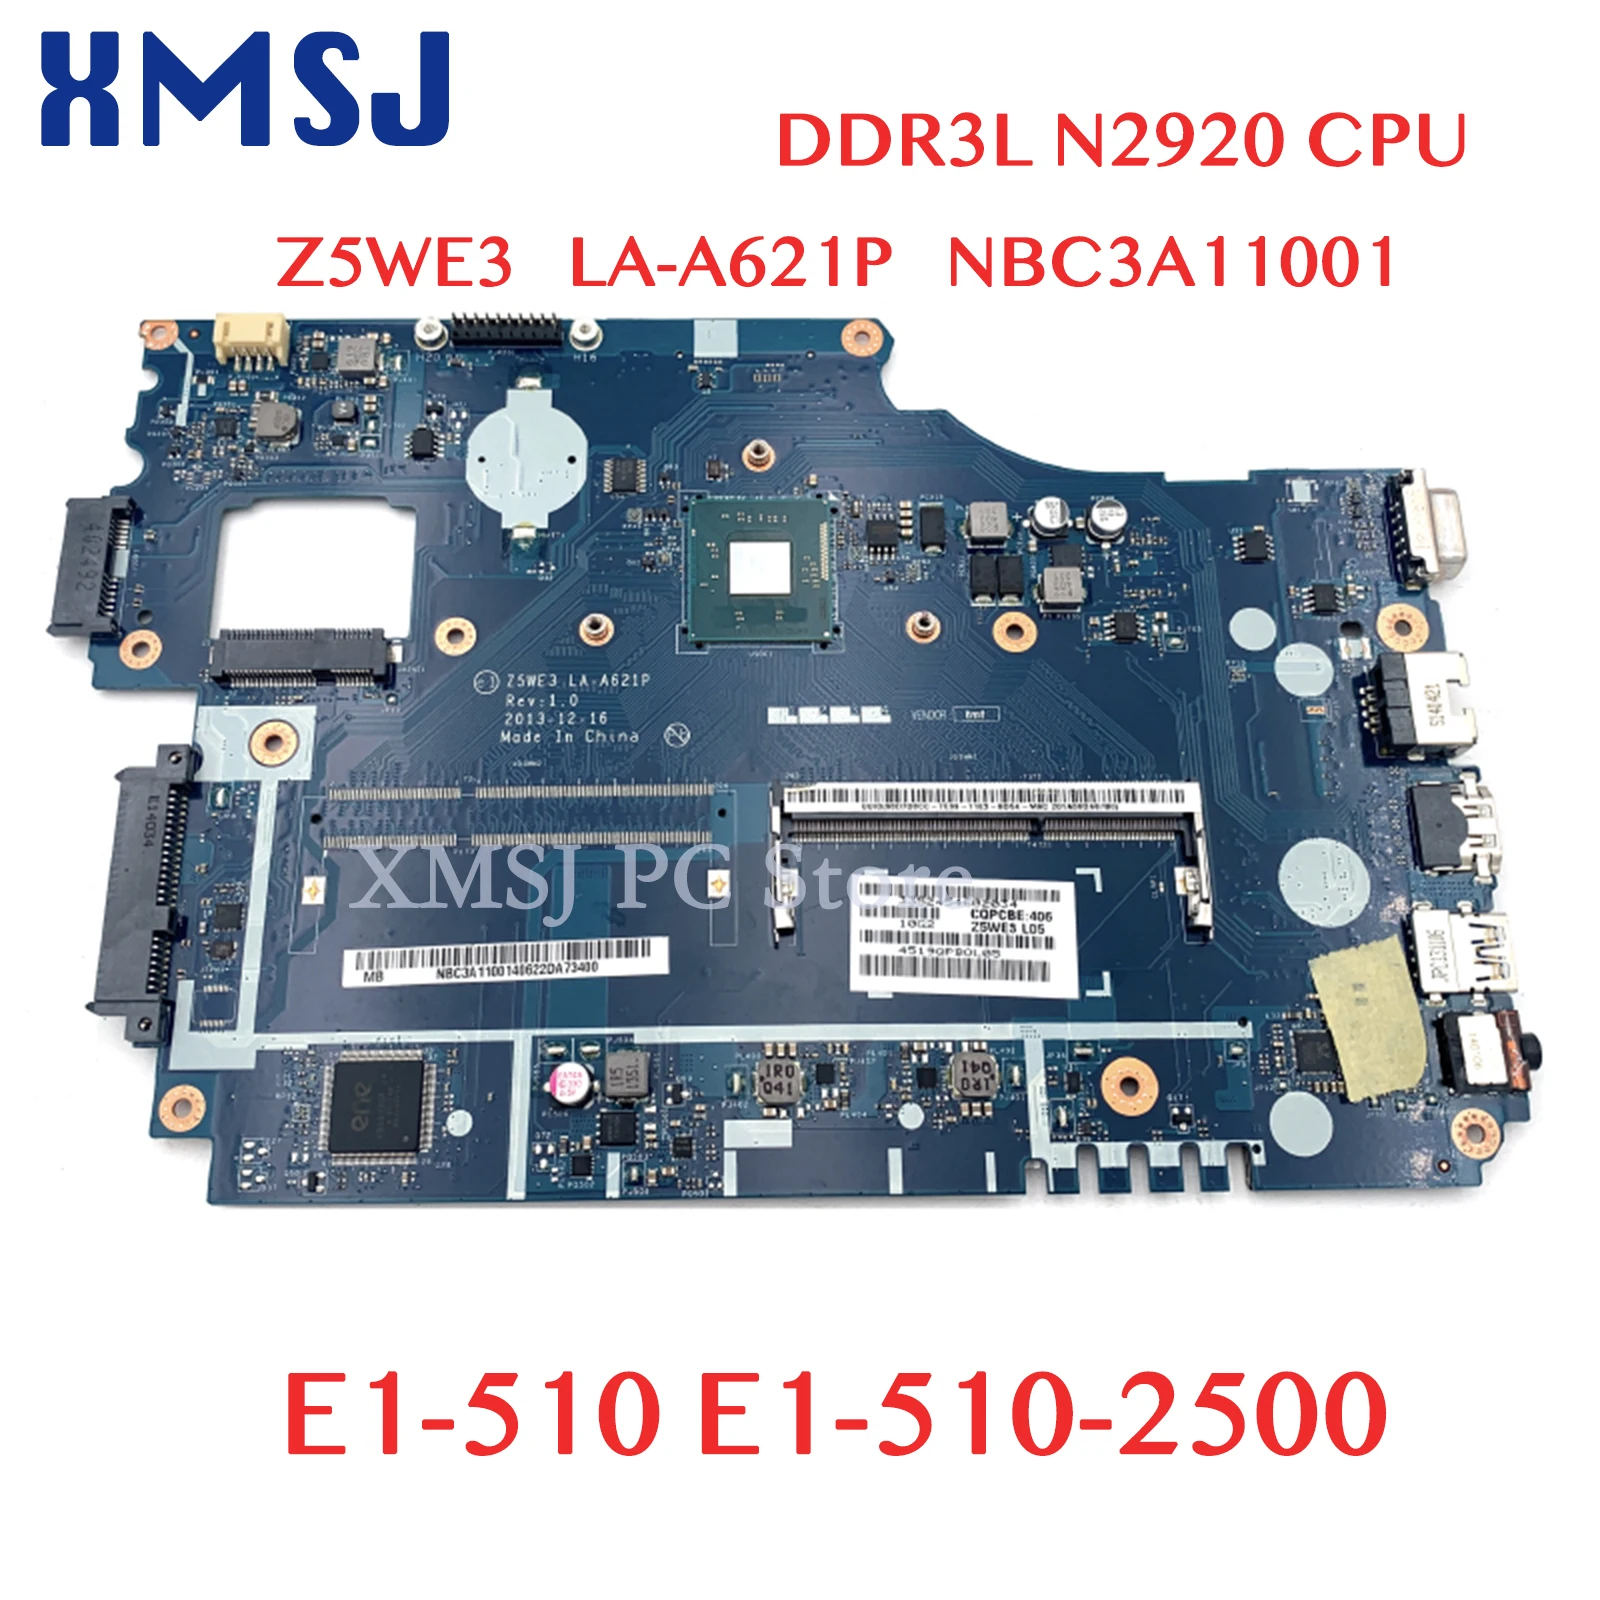 

XMSJ For Acer Aspire E1-510 E1-510-2500 Z5WE3 LA-A621P NBC3A11001 Laptop Motherboard DDR3L N2820 N2920 CPU Main Board Full Test